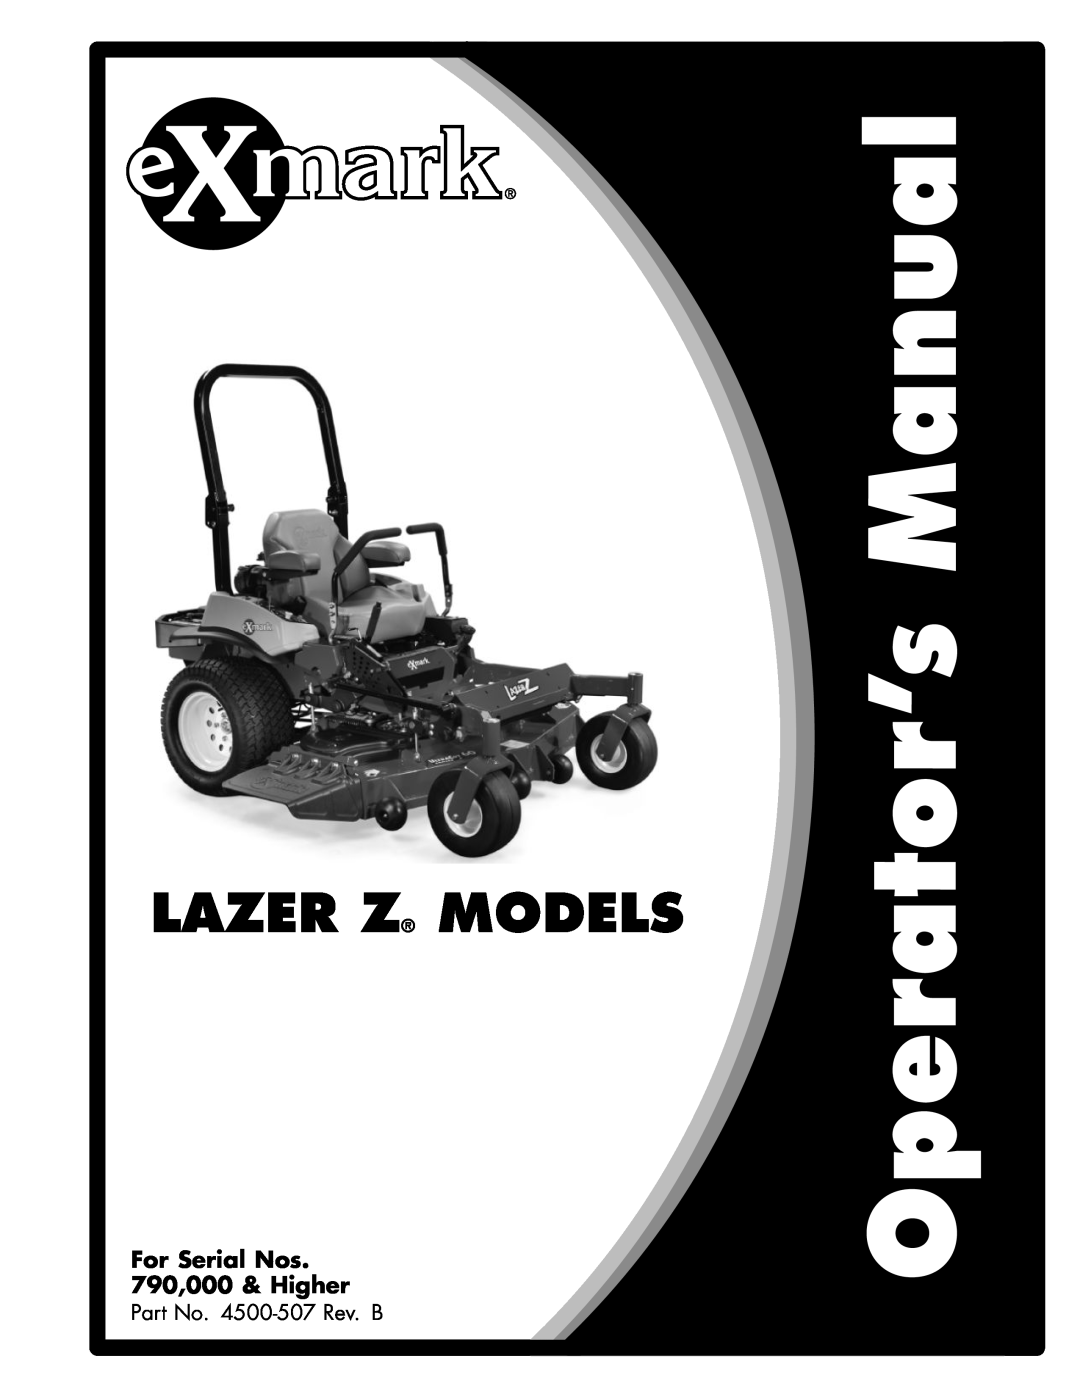 Exmark 4500-507 manual For Serial Nos 790,000 & Higher, Lazer Z Models 